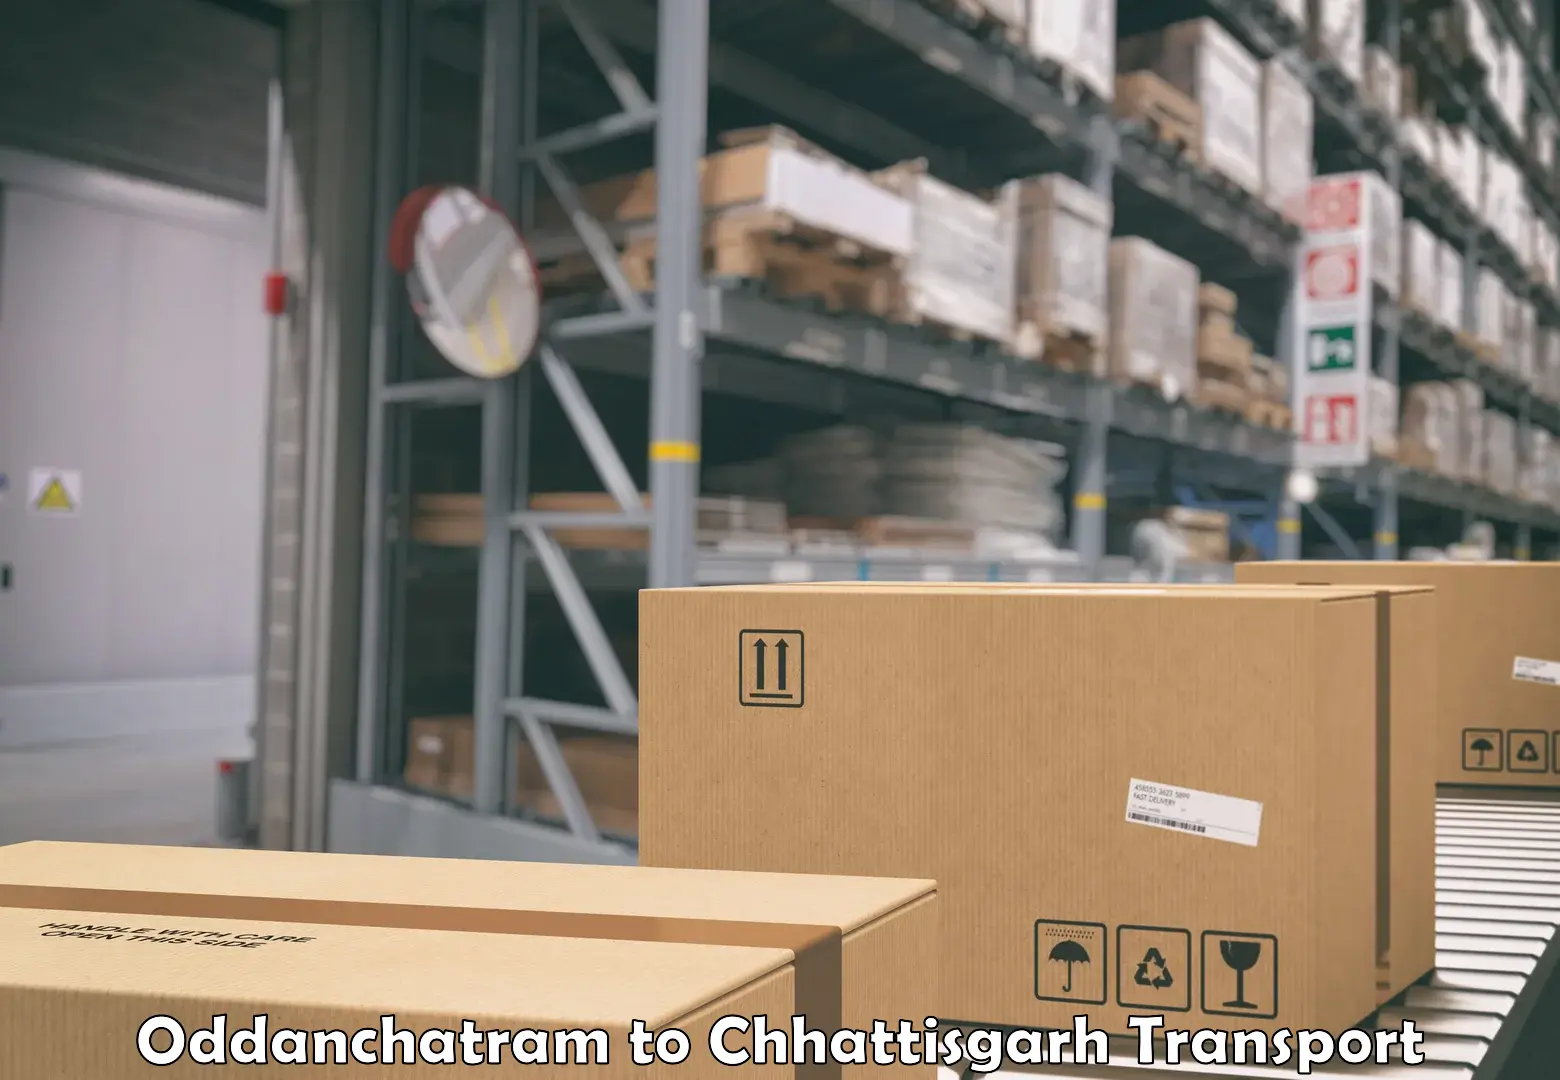 Truck transport companies in India Oddanchatram to Raigarh Chhattisgarh